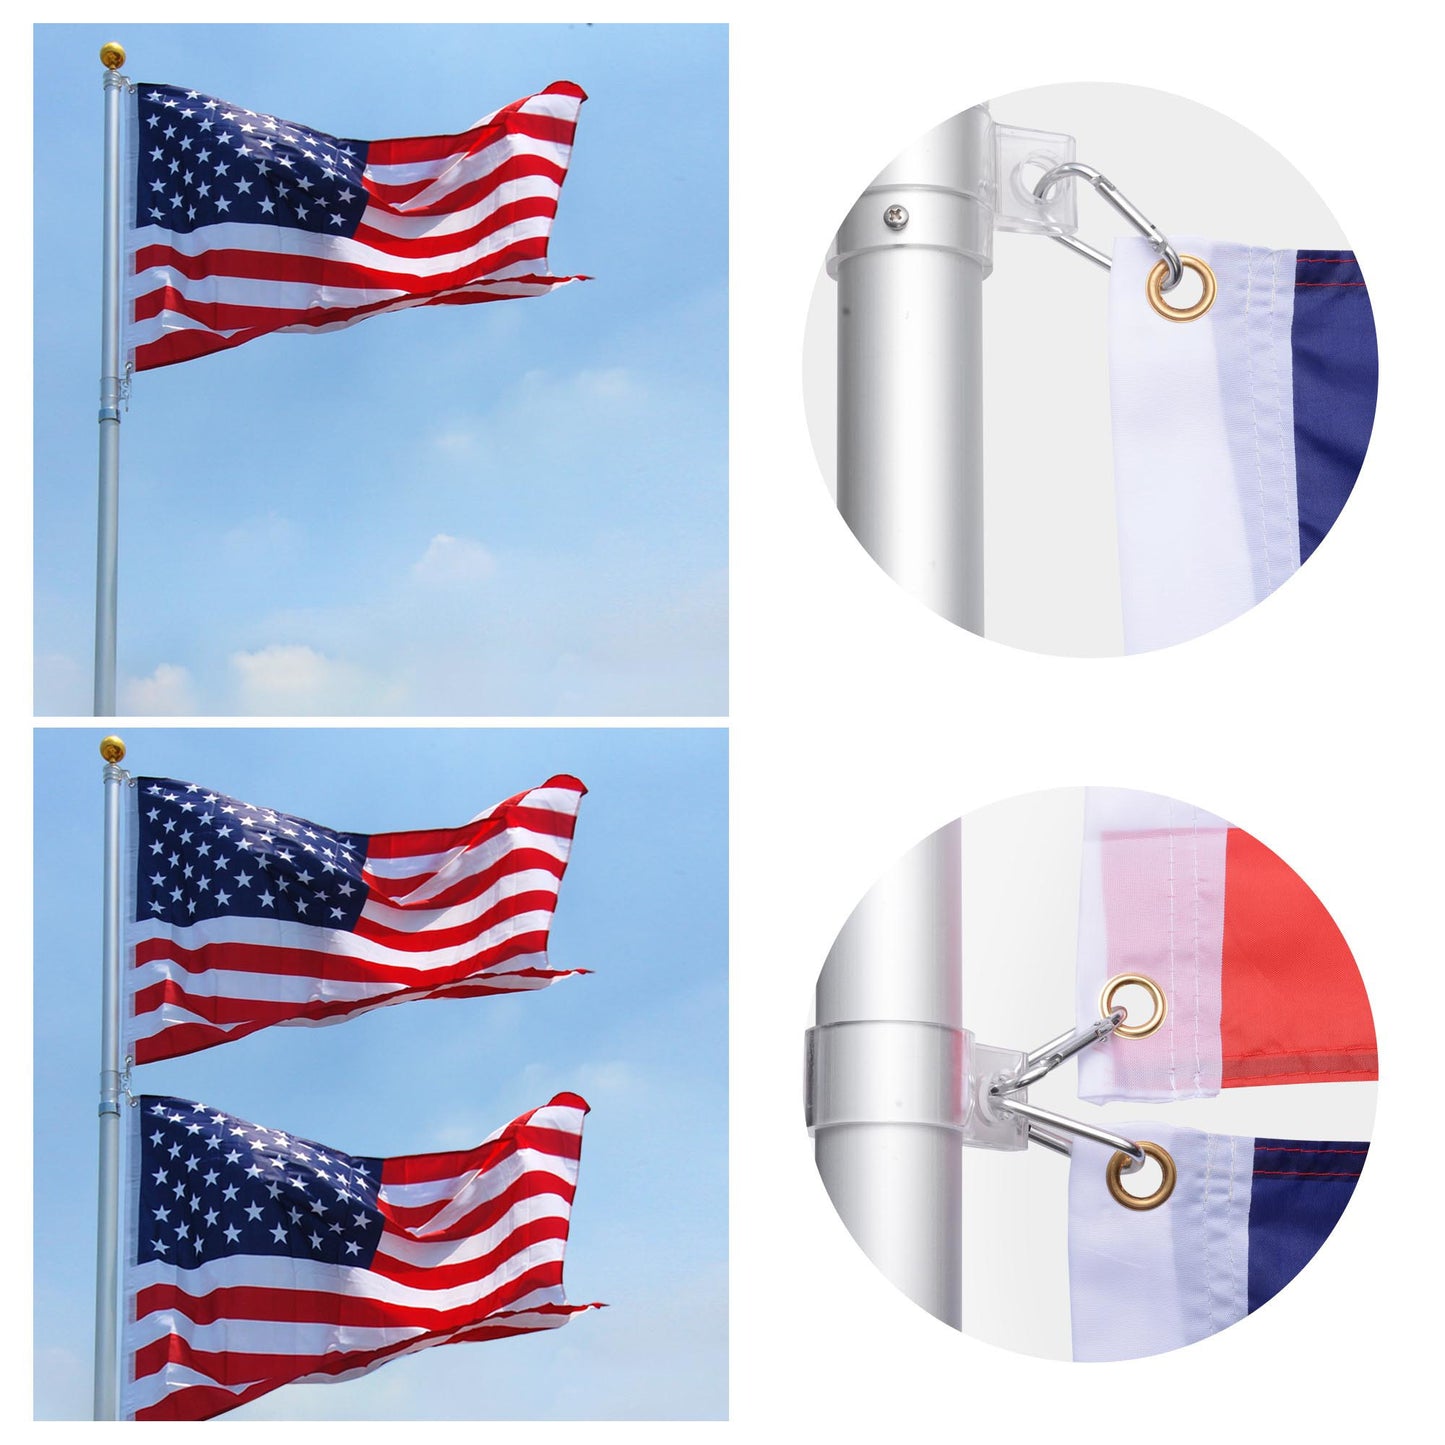 30 ft Al Flag Pole w/ US Flag and Ball